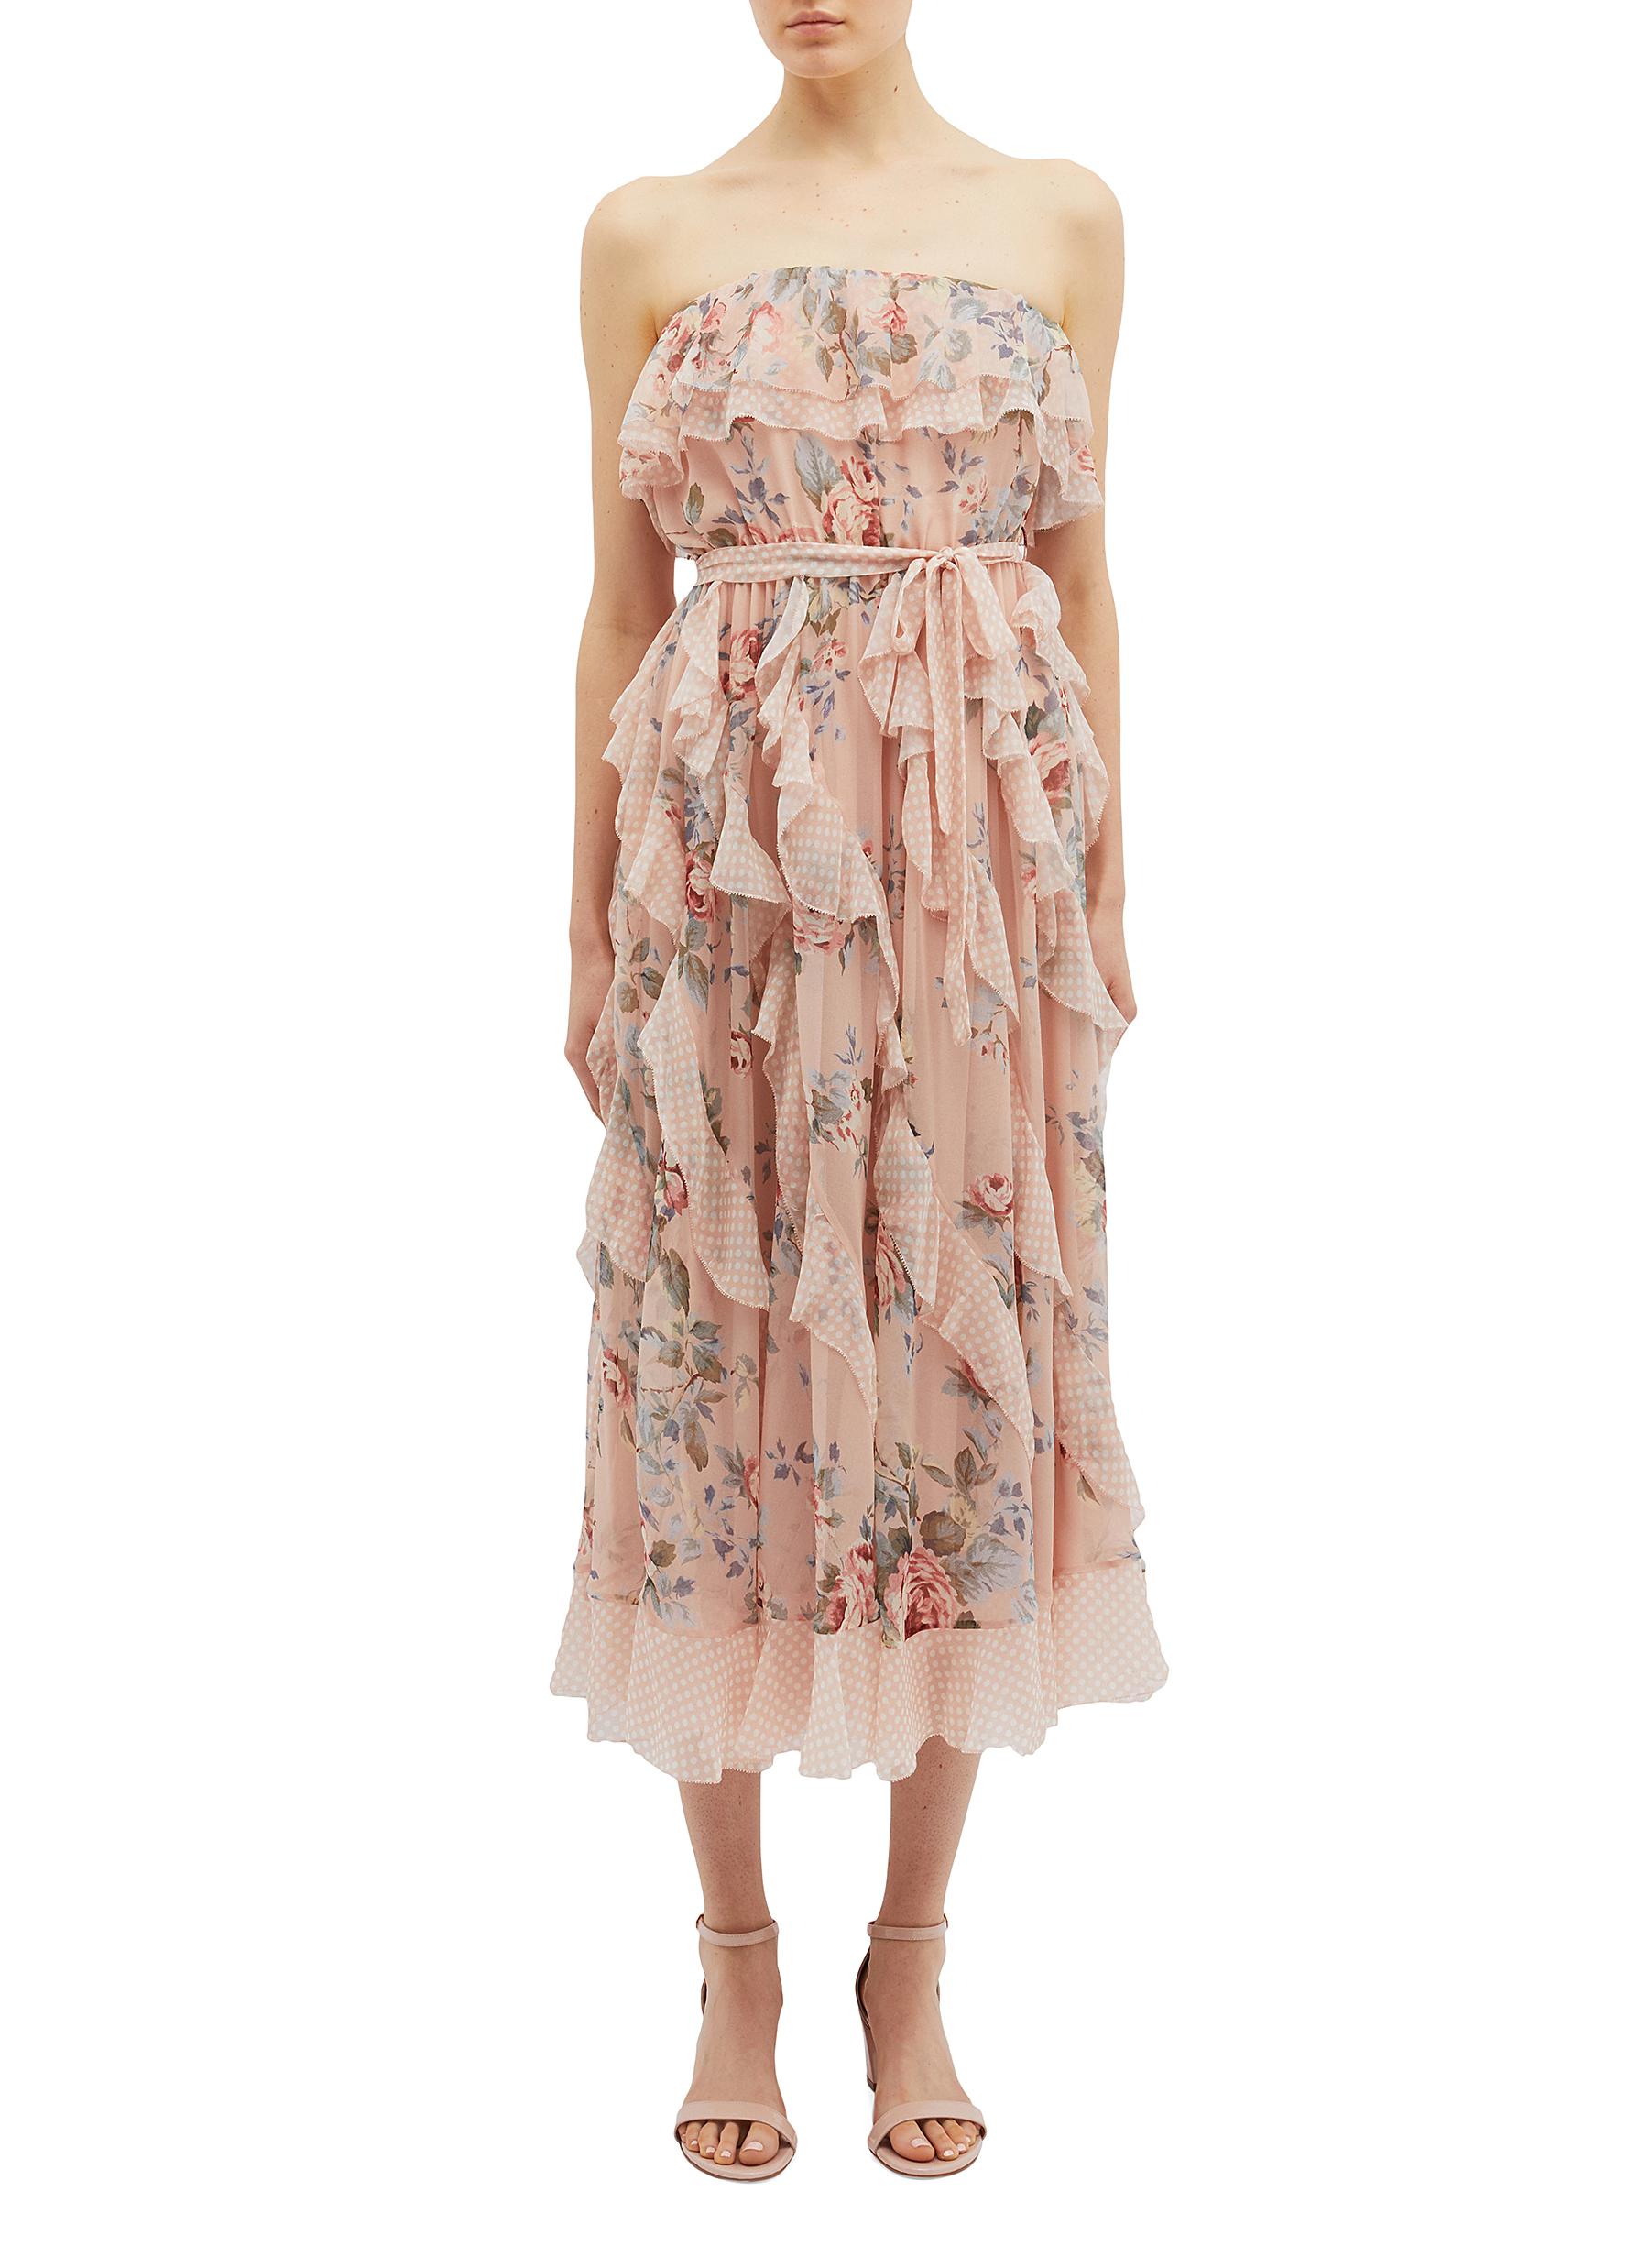 Bowie Waterfall ruffle floral print silk strapless dress by Zimmermann